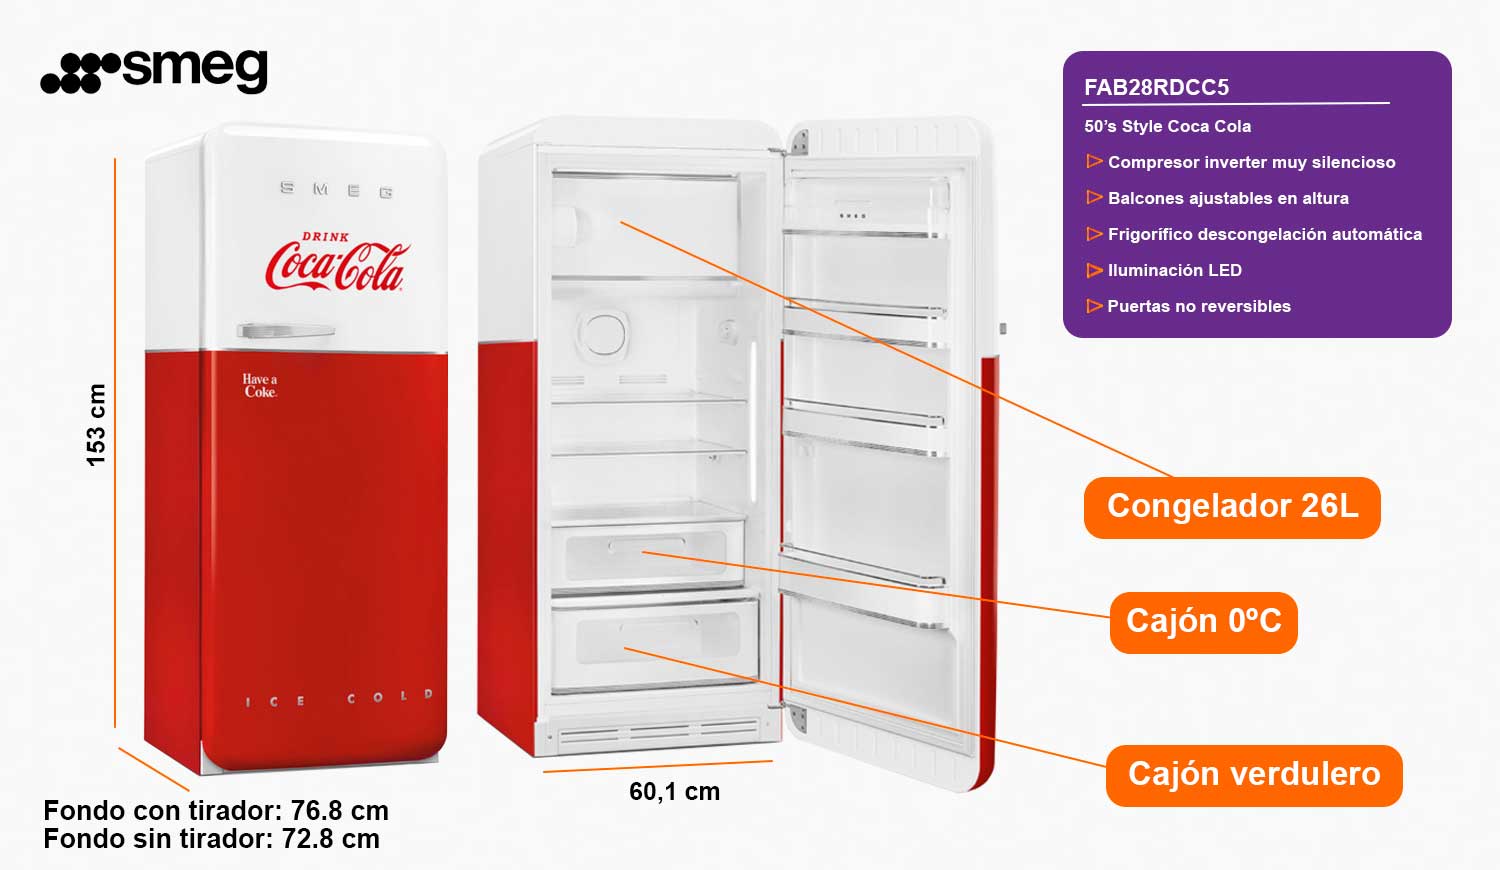 Smeg fab28rdcc5 frigorífico 153x60.1x72.8cm 50’s style coca cola clase d